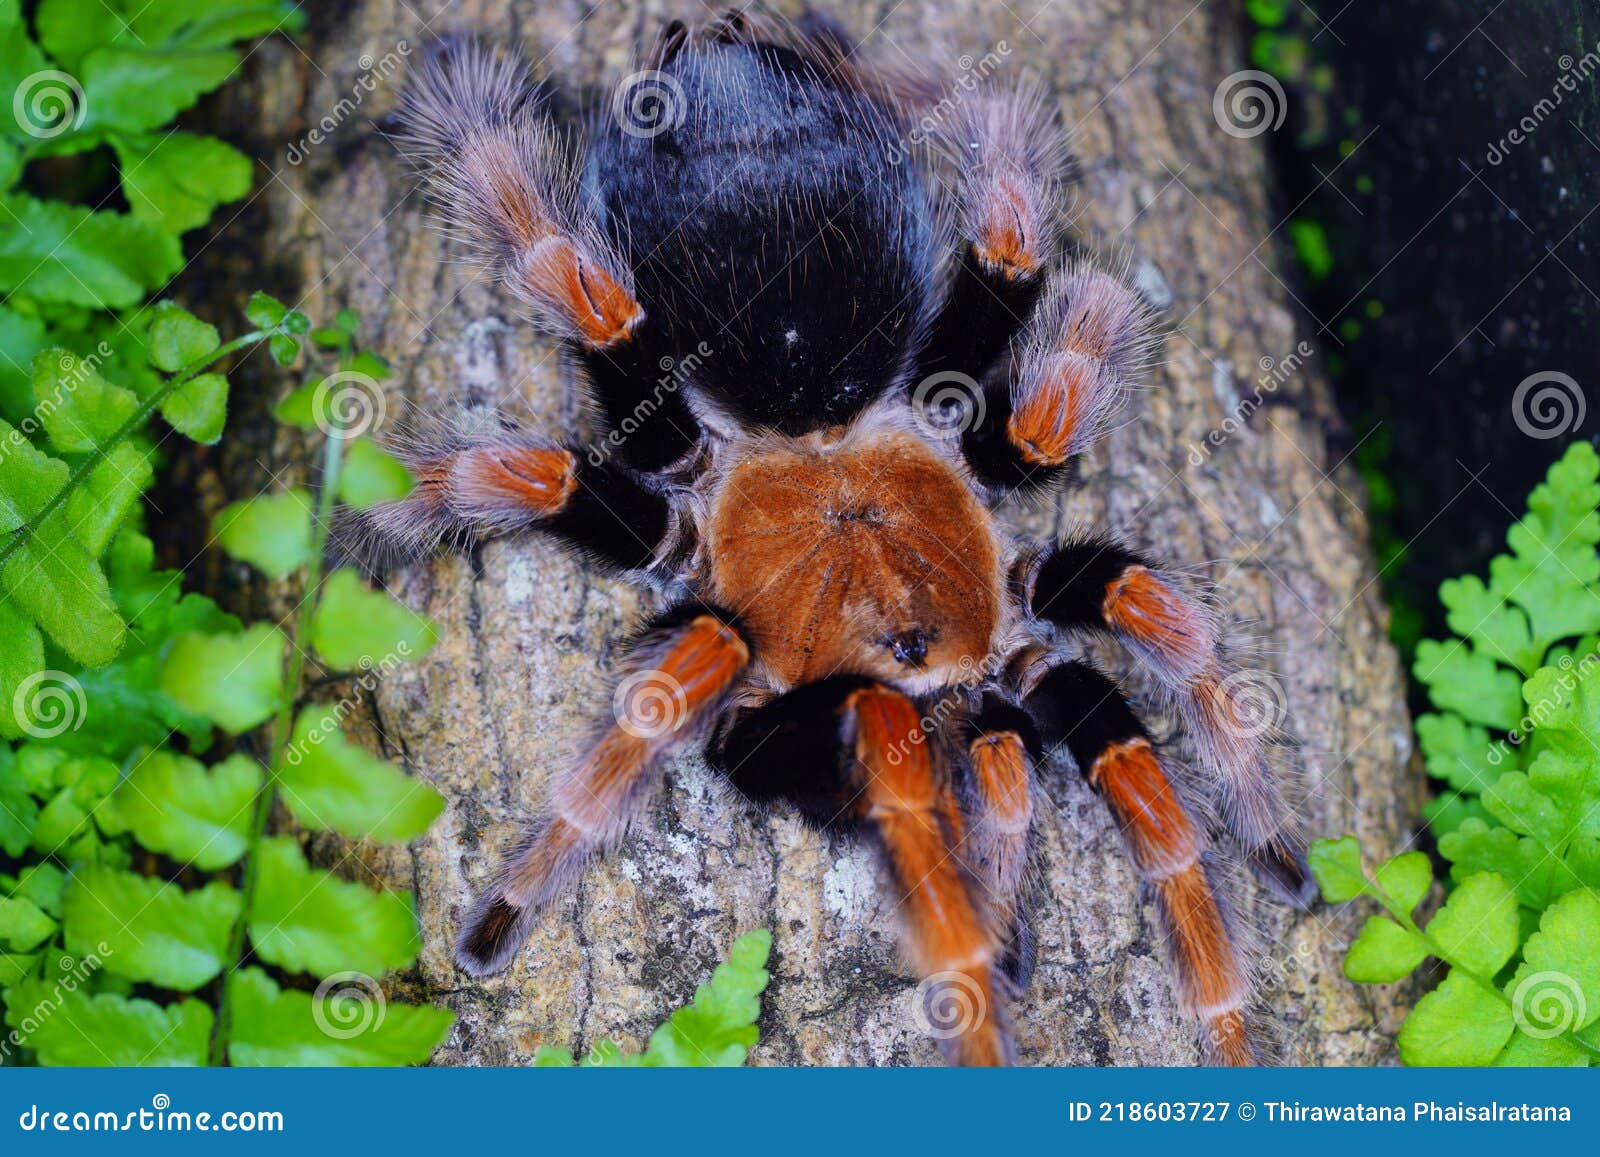 Tarantula, Family Theraphosidae is Building a Nest. Tarantula is a ...